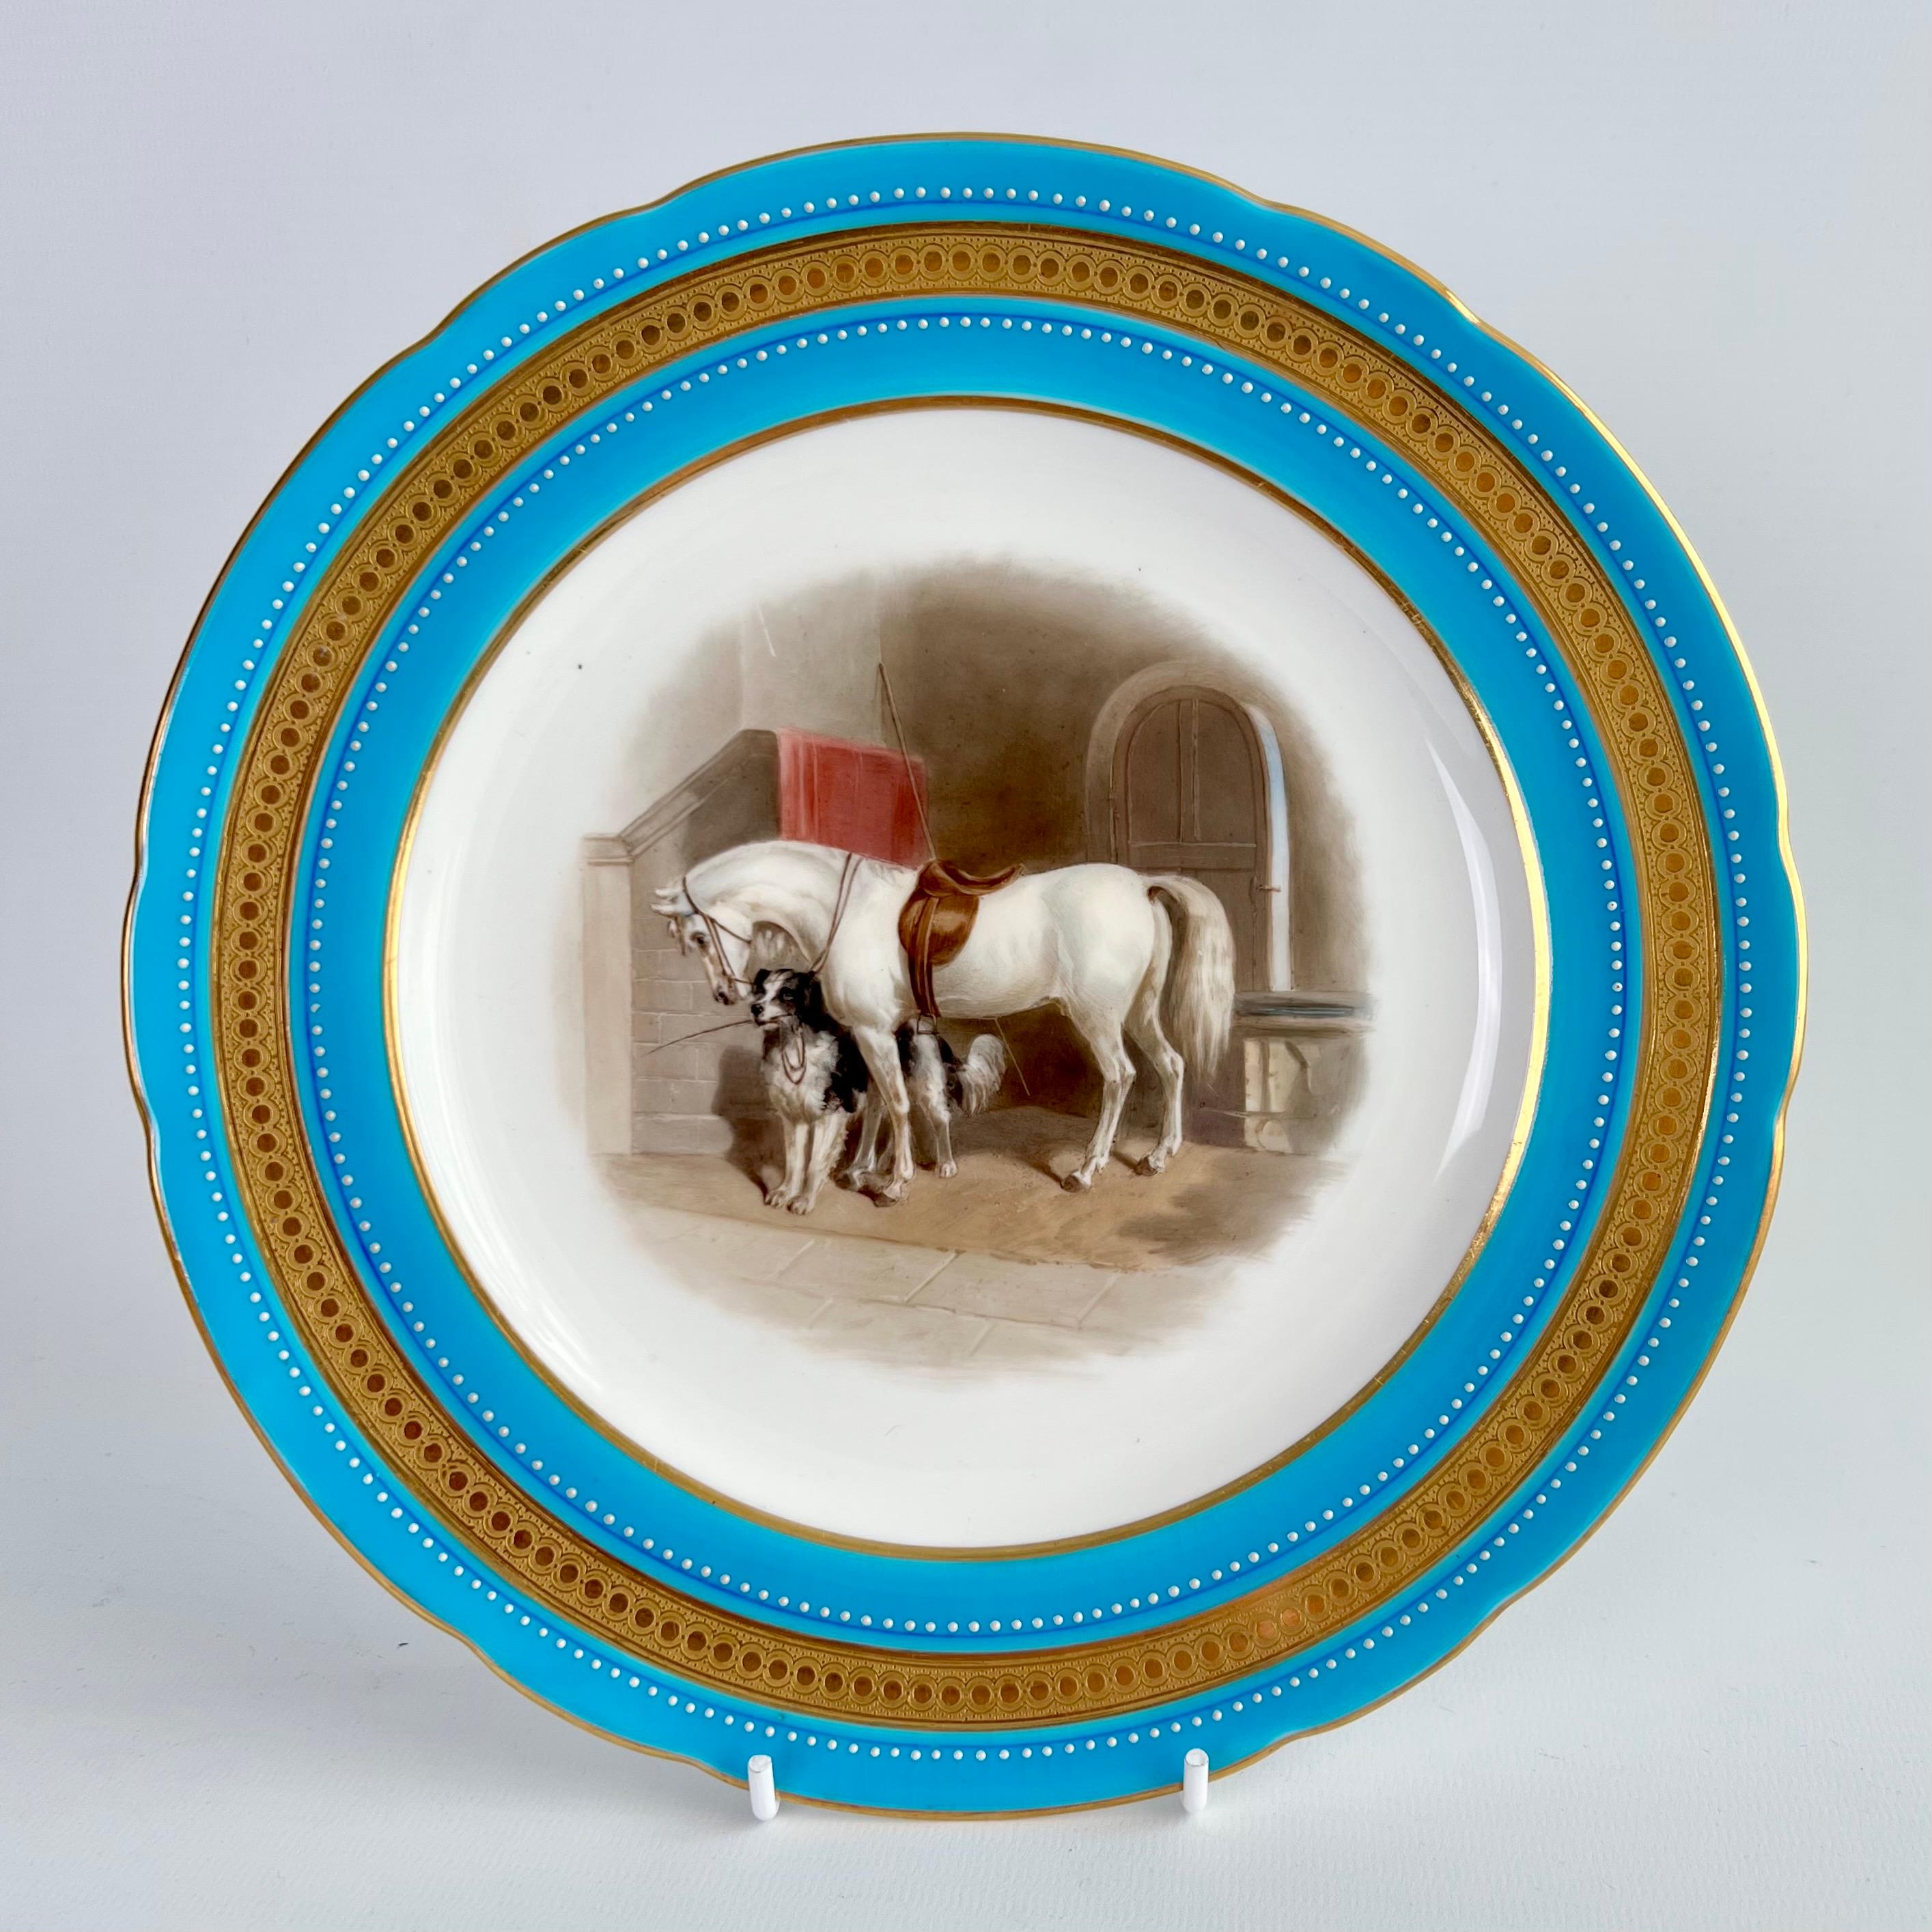 Minton Porcelain Dessert Service, Turquoise, Equestrian Horses, Victorian, 1871 For Sale 5